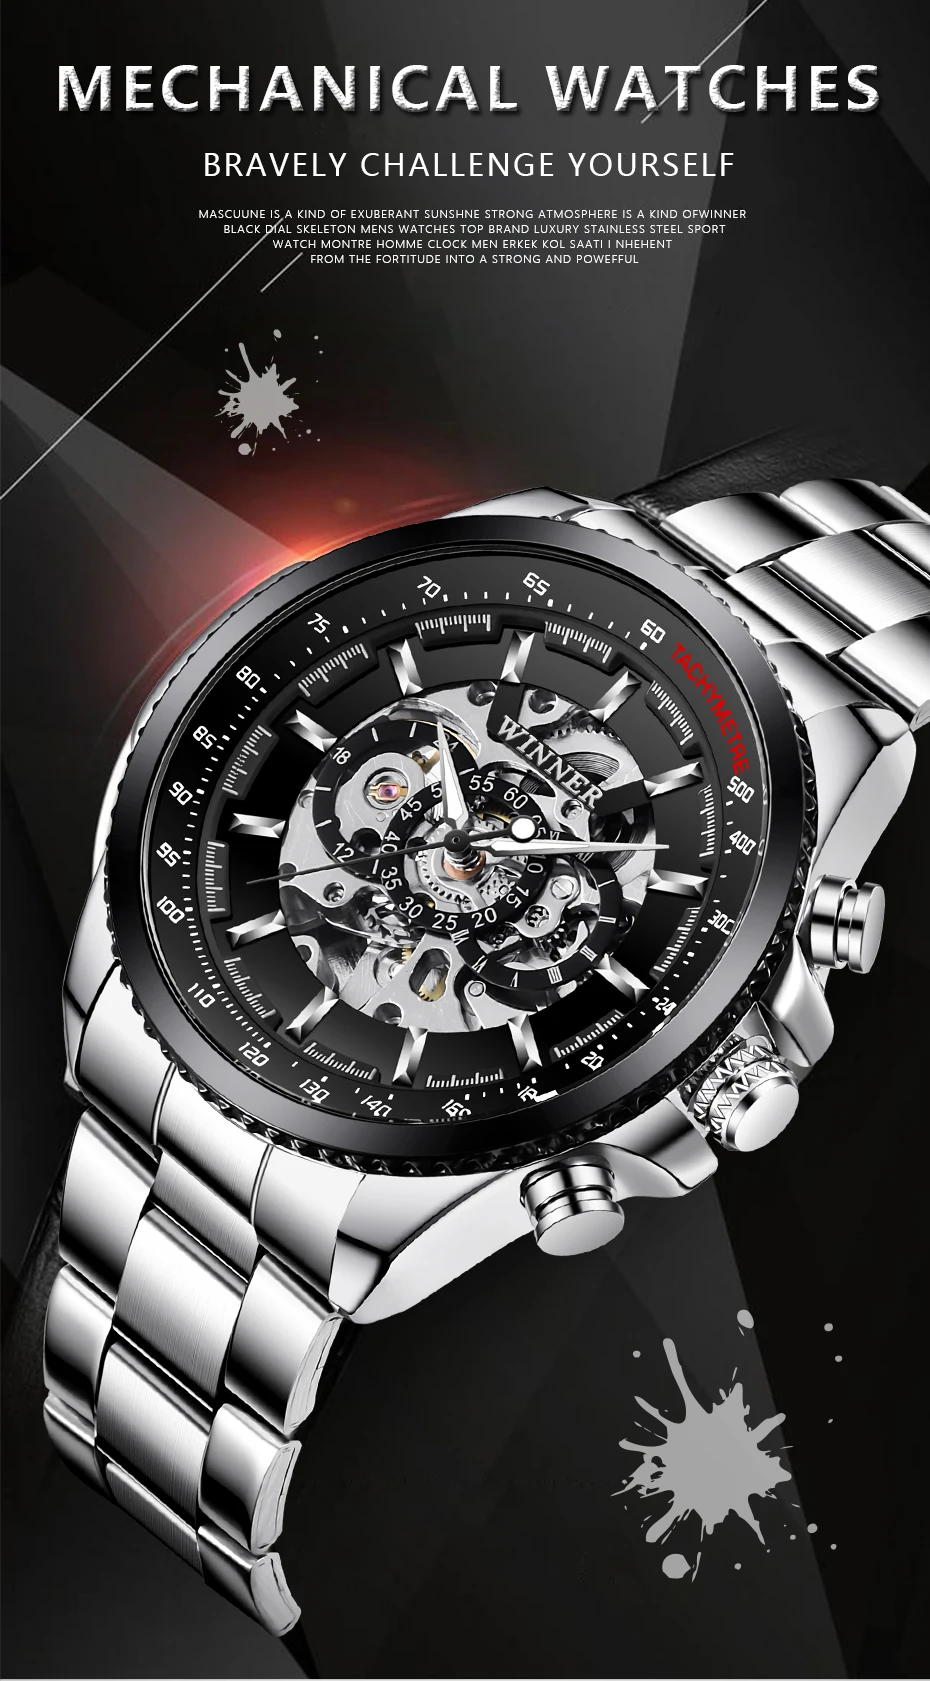 Winner Sport Design Bezel Golden Watch Mens Watches Top Brand Luxury Montre Homme Clock Men Steampunk Automatic Skeleton Watch